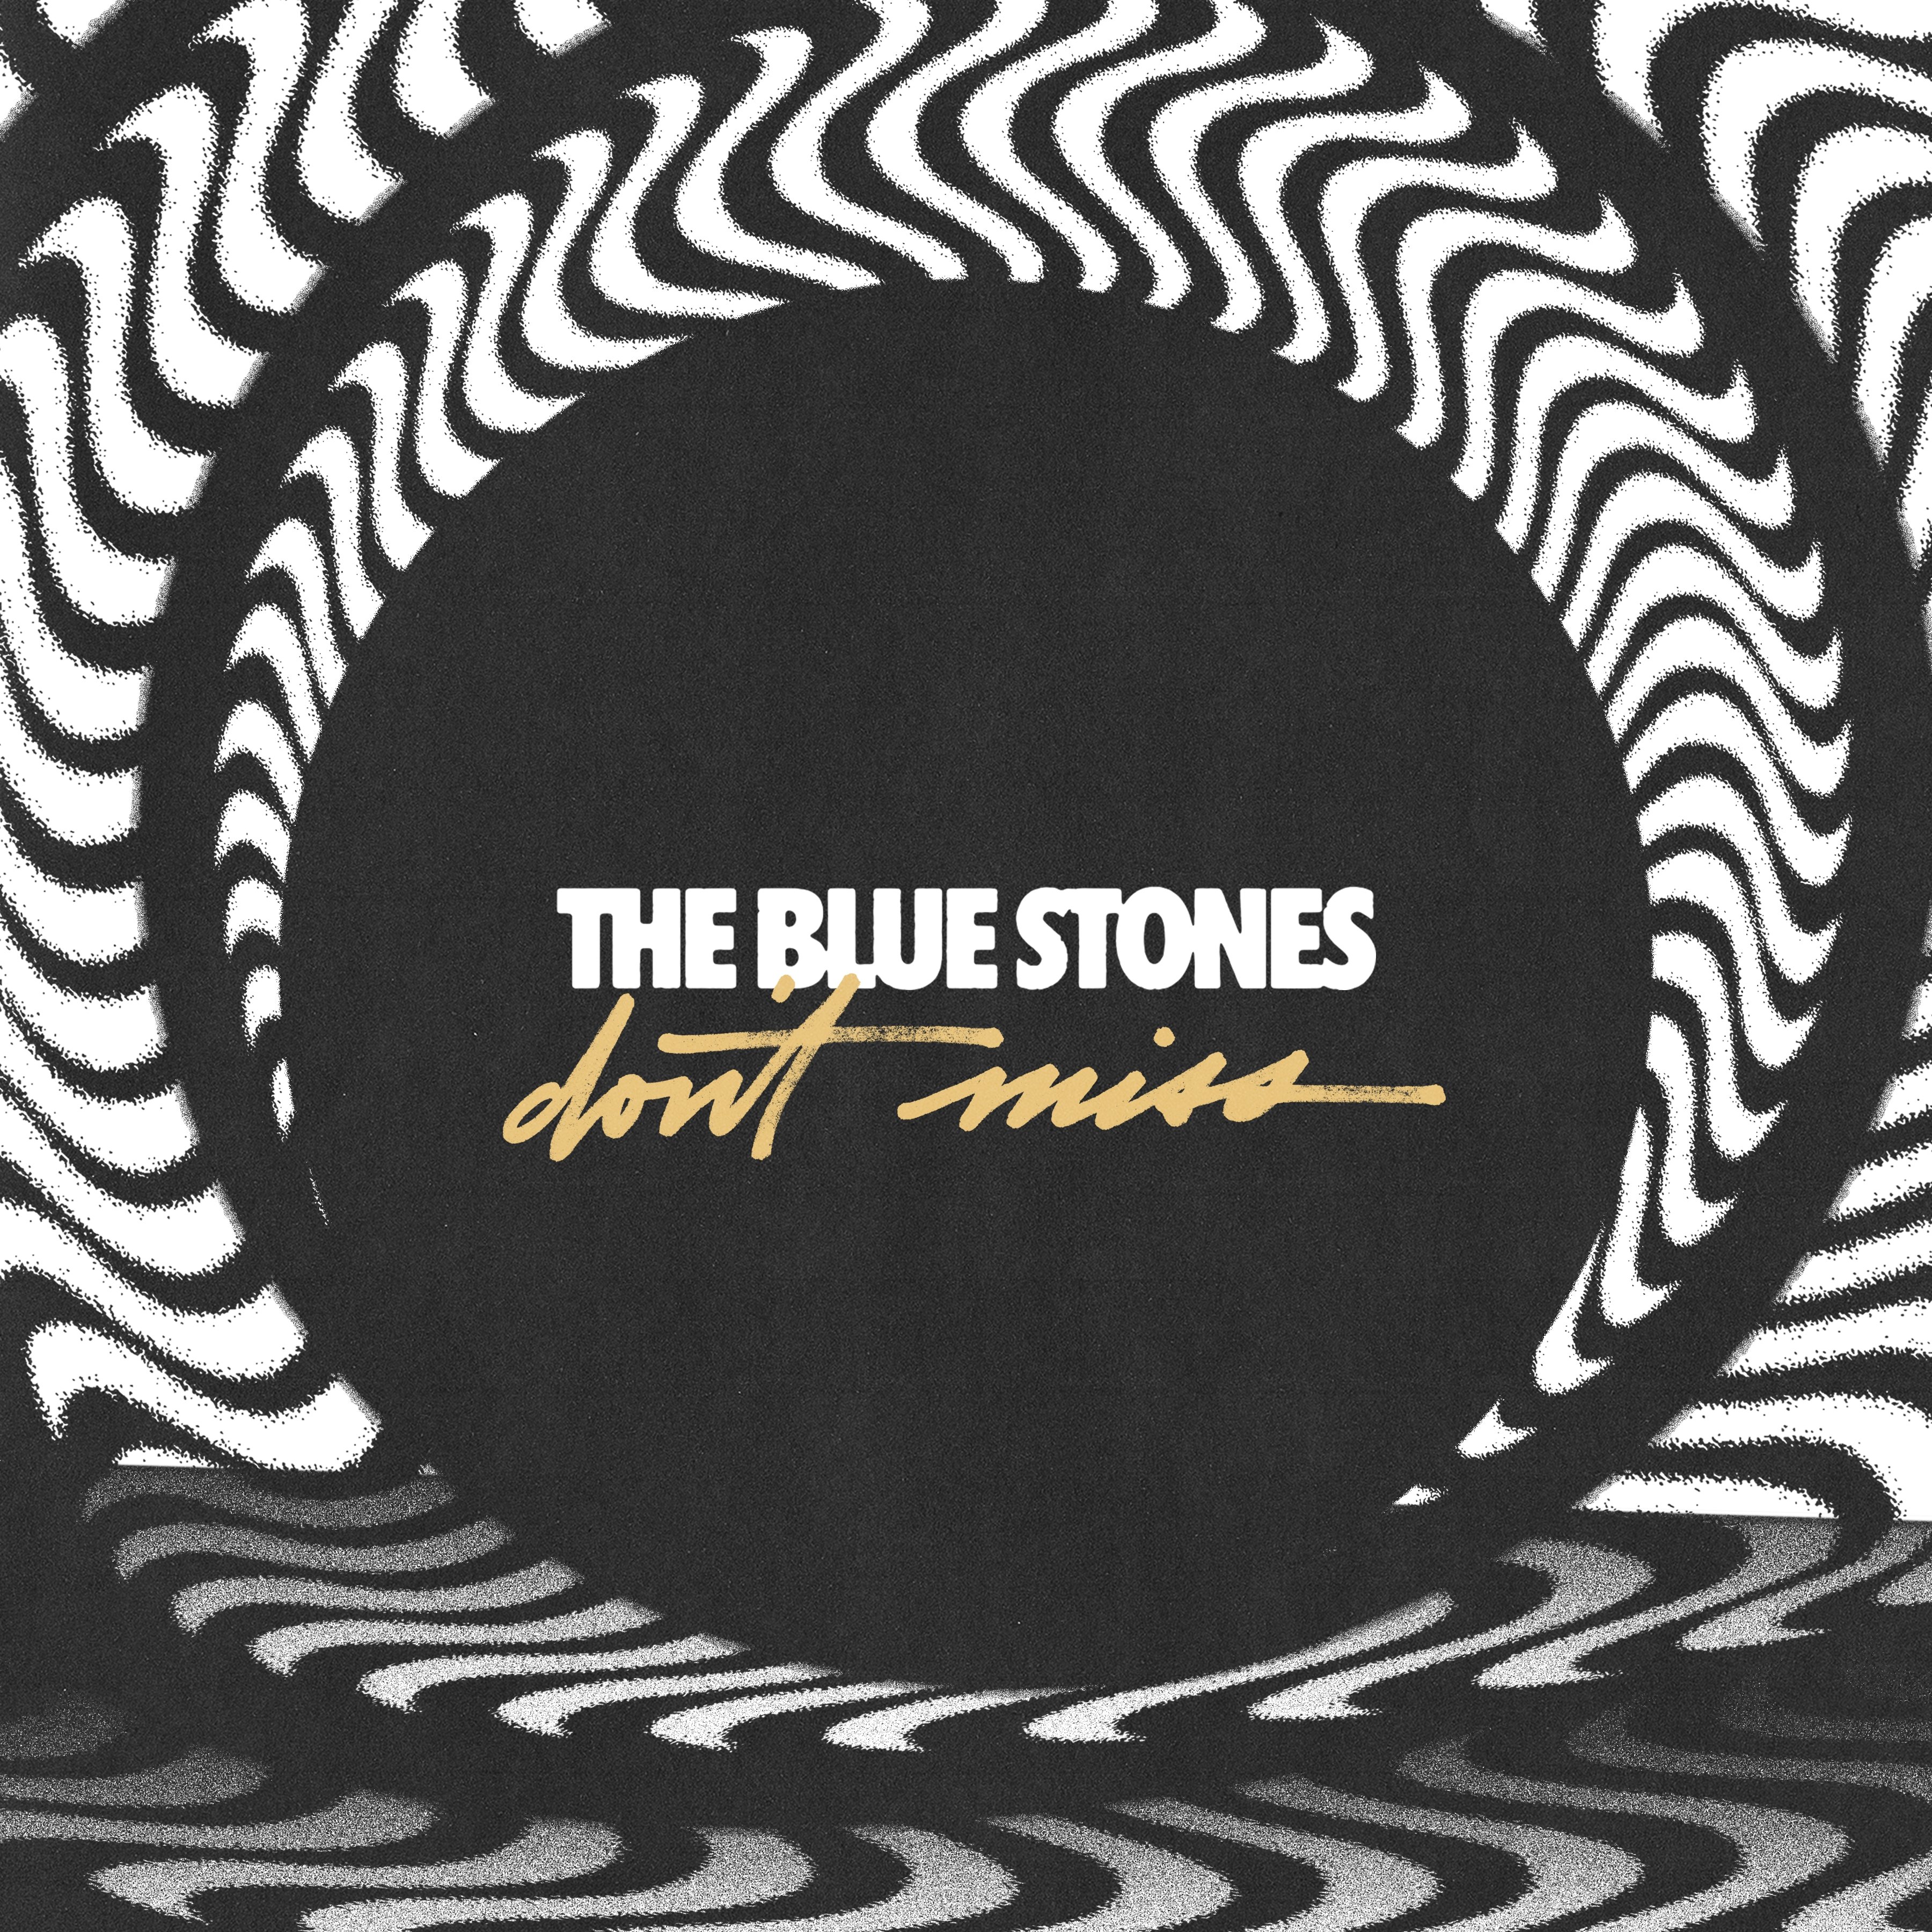 Stoned don t. The Blue Stones. "The Blue Stones" && ( исполнитель | группа | музыка | Music | Band | artist ) && (фото | photo). The Blue Stones make this easy.